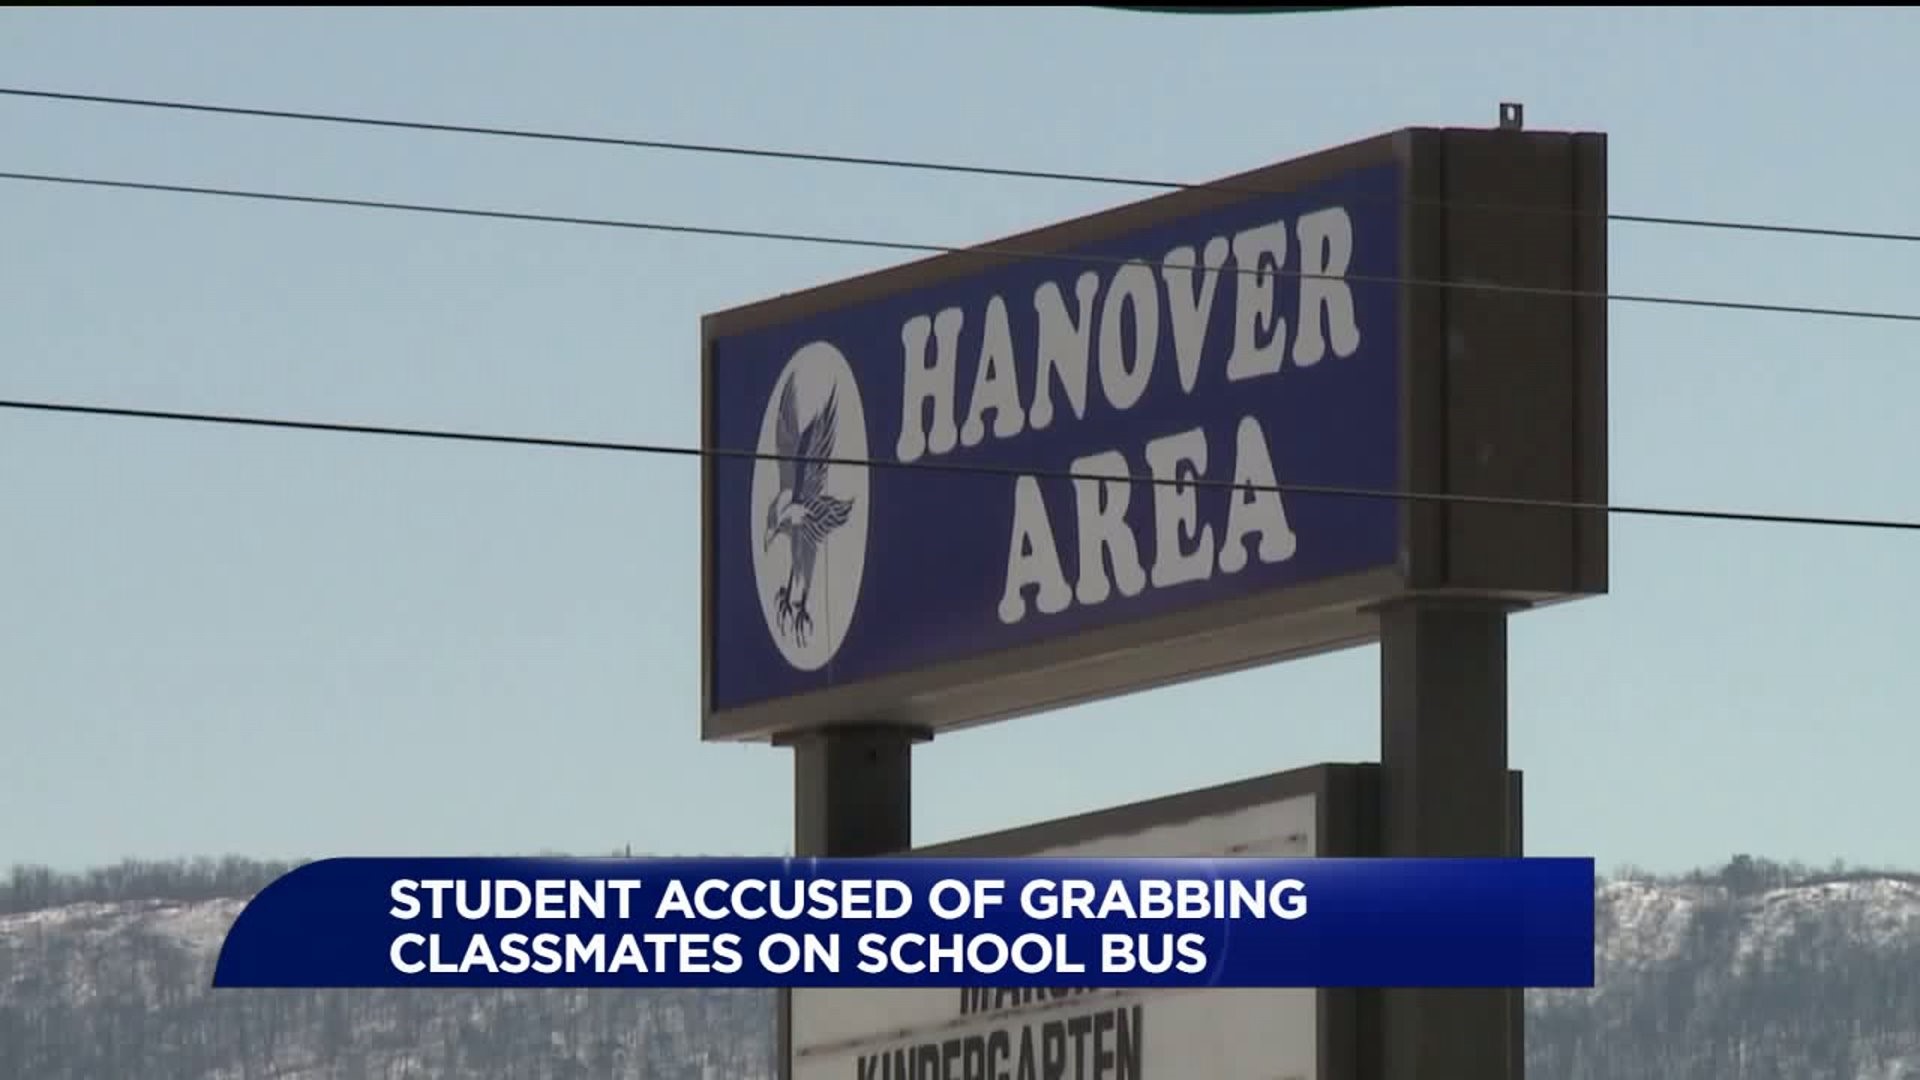 Student Accused of Grabbing Classmates on School Bus